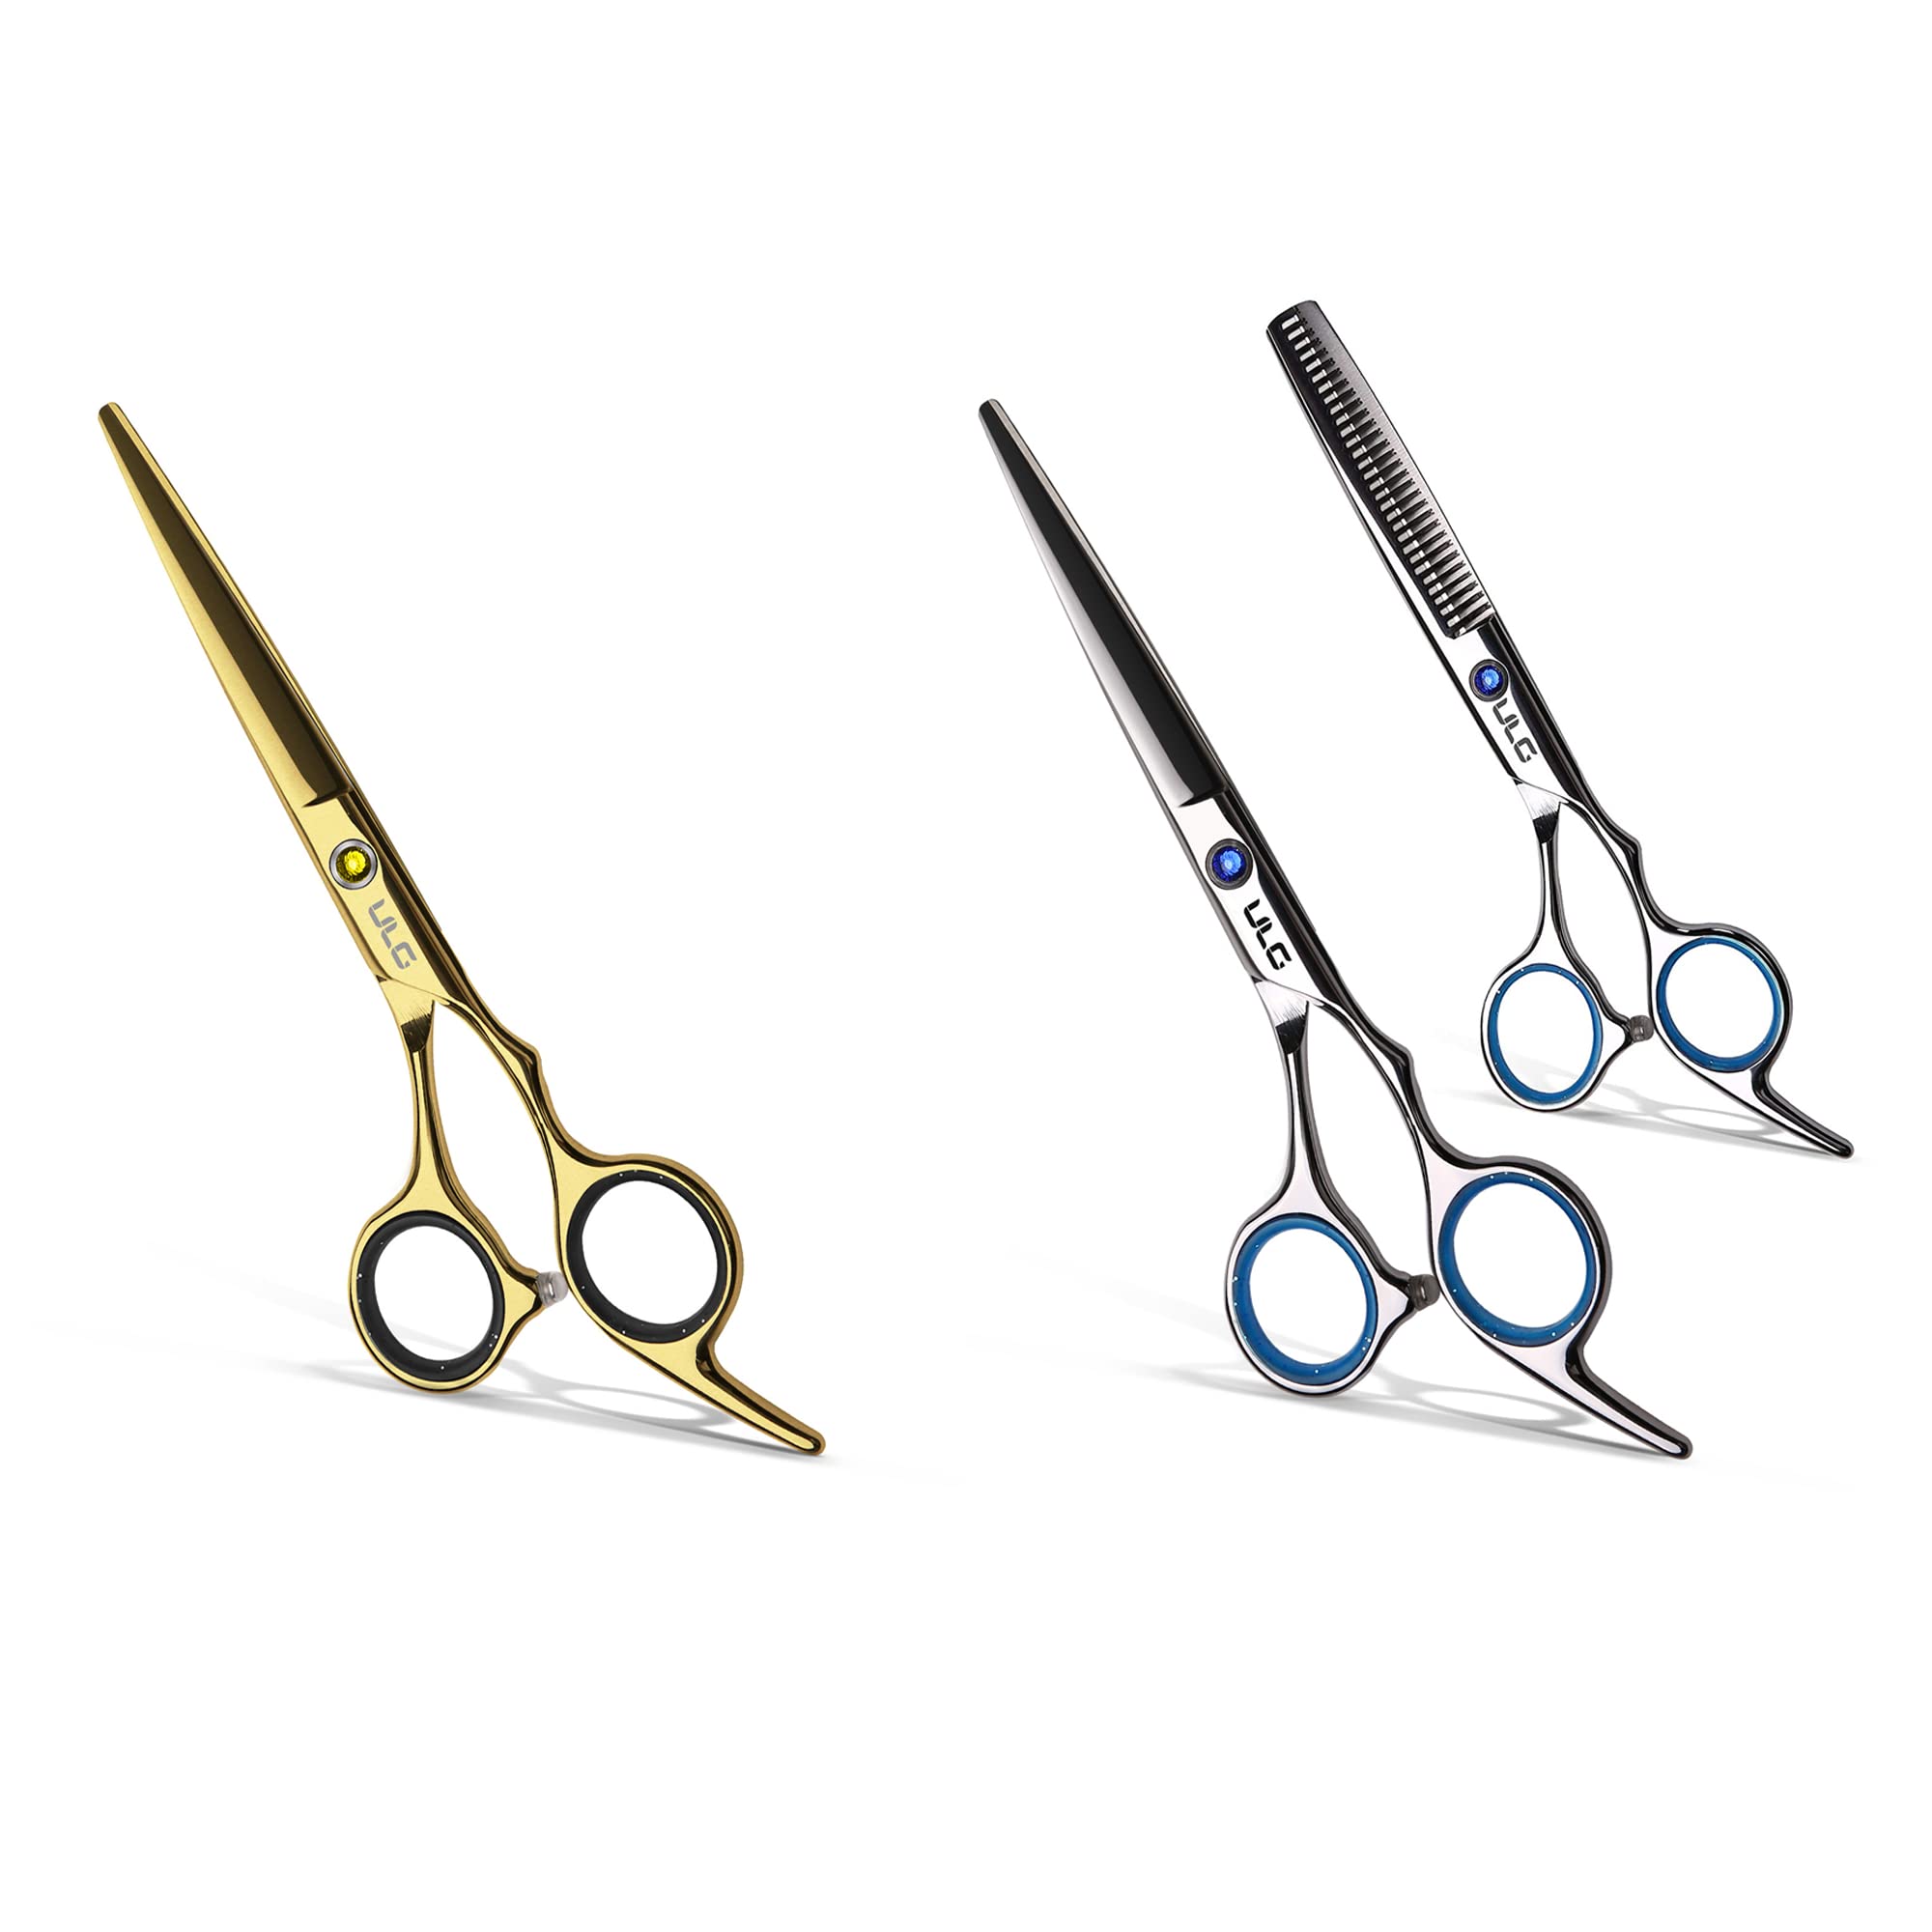 Hair Cutting Scissors Thinning Shears Kit ULG Professional Barber Hairdressing Texturizing Salon Razor Edge Scissor Japanese Stainless Steel 6.5 inch